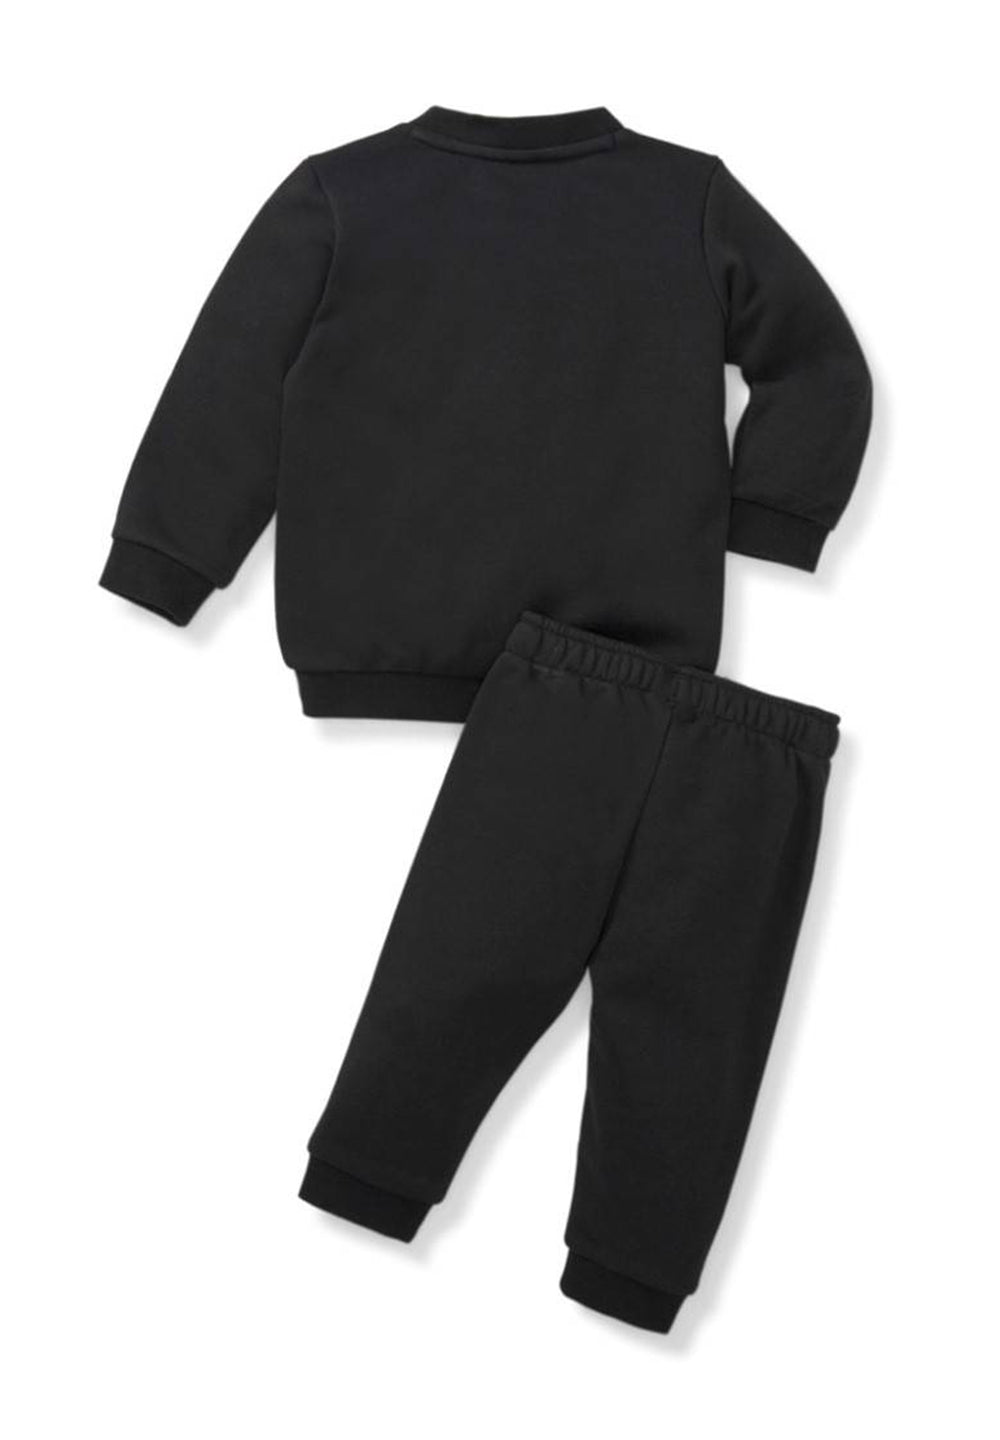 Black sweatshirt set for newborn